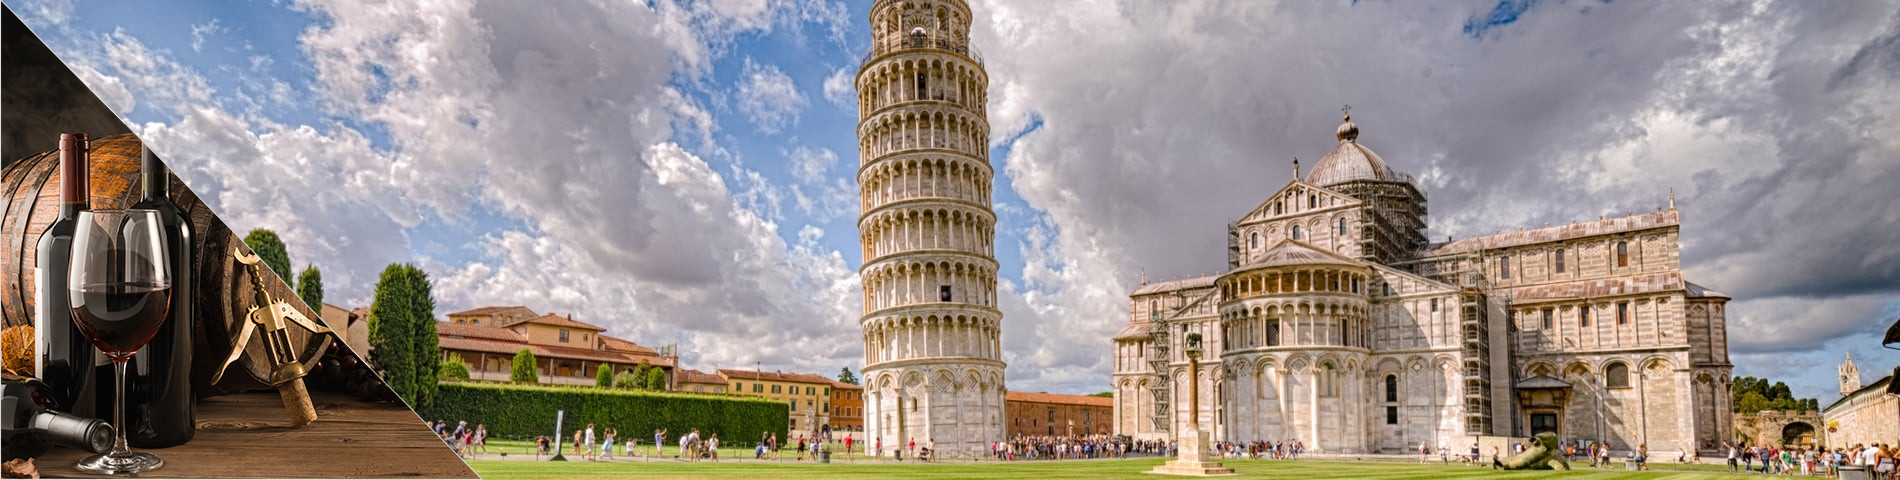 Pisa - Italština a Enologie